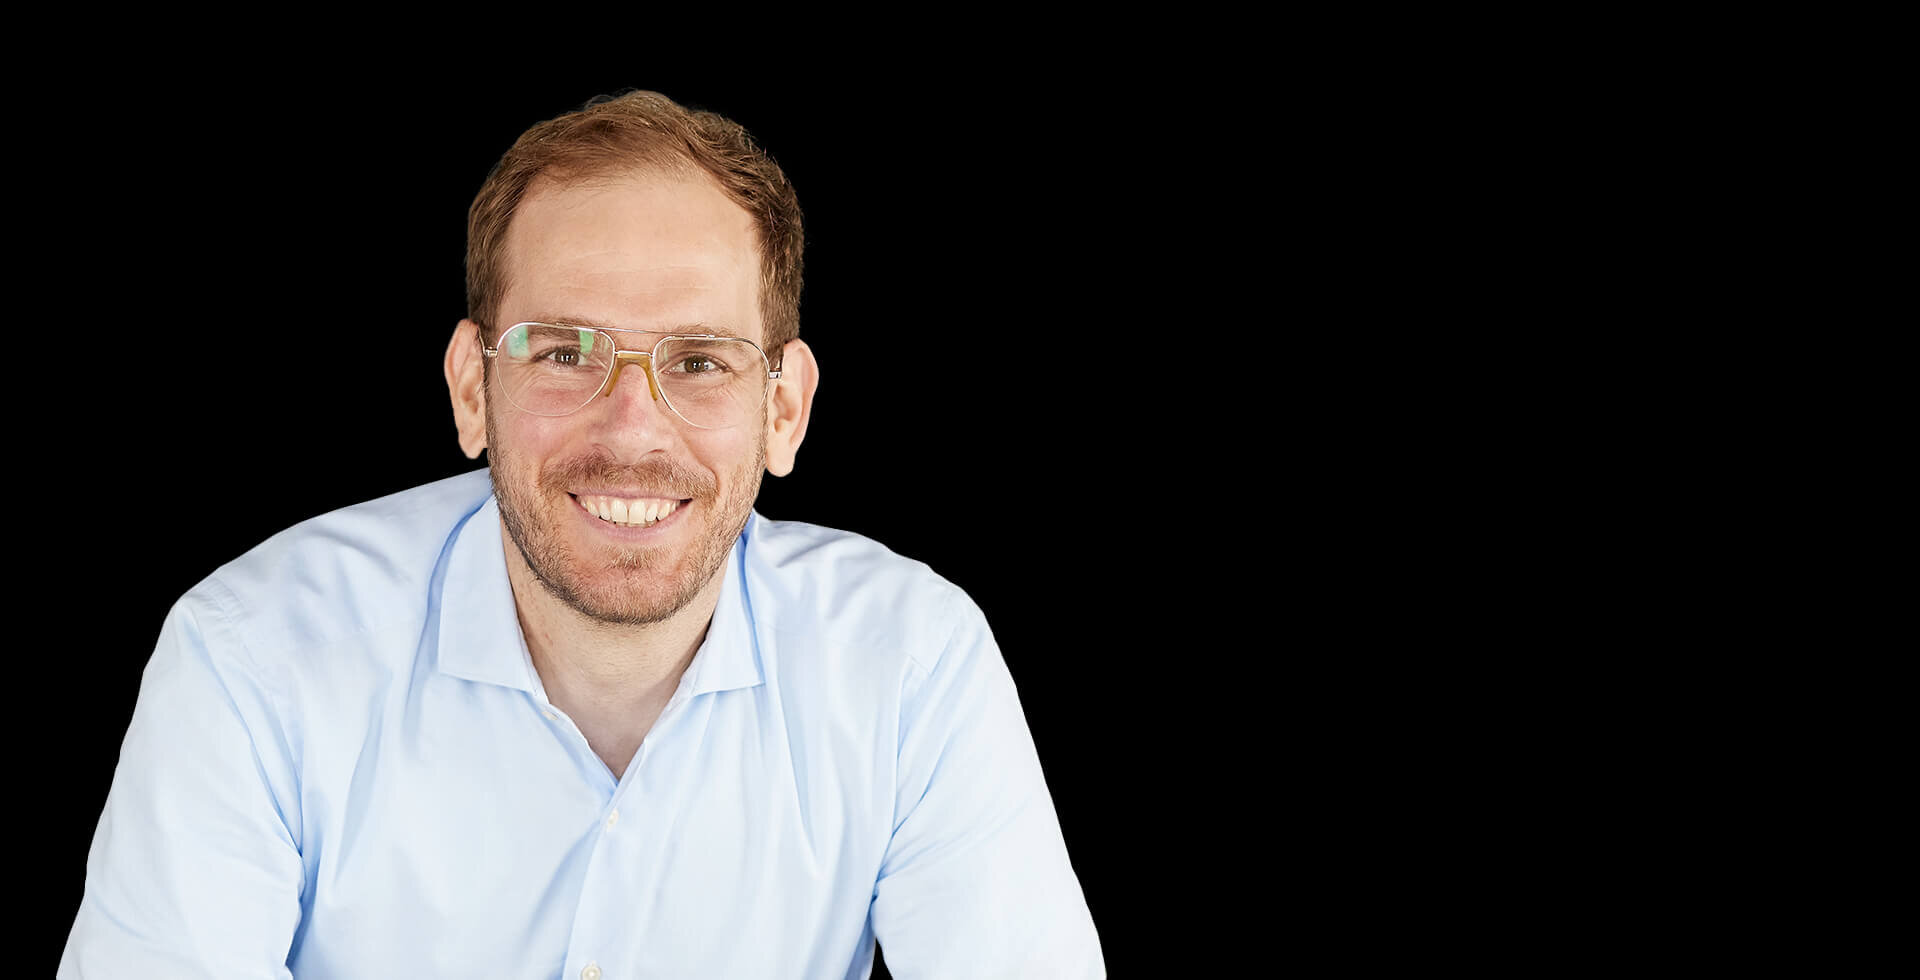 Martin Preiß, Head of Digital Innovation and Services